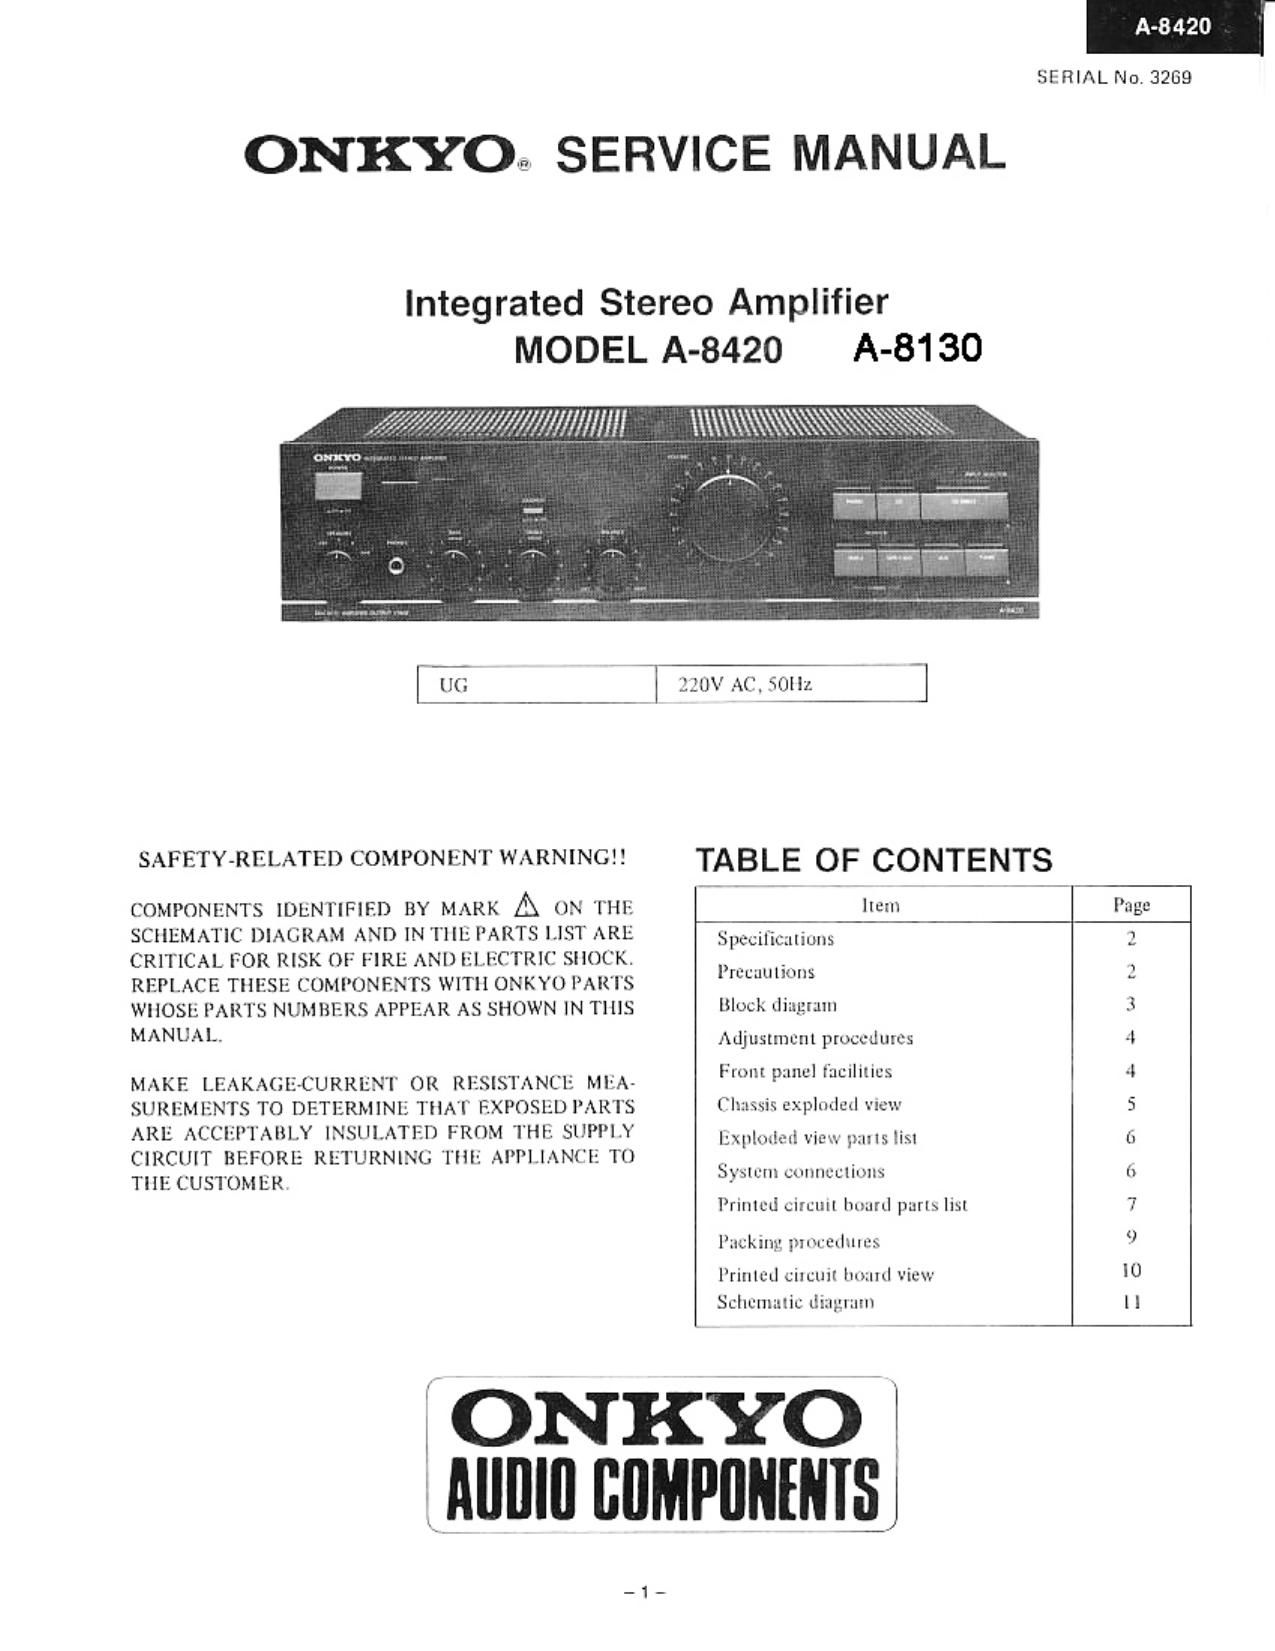 Onkyo A 8130 Service Manual